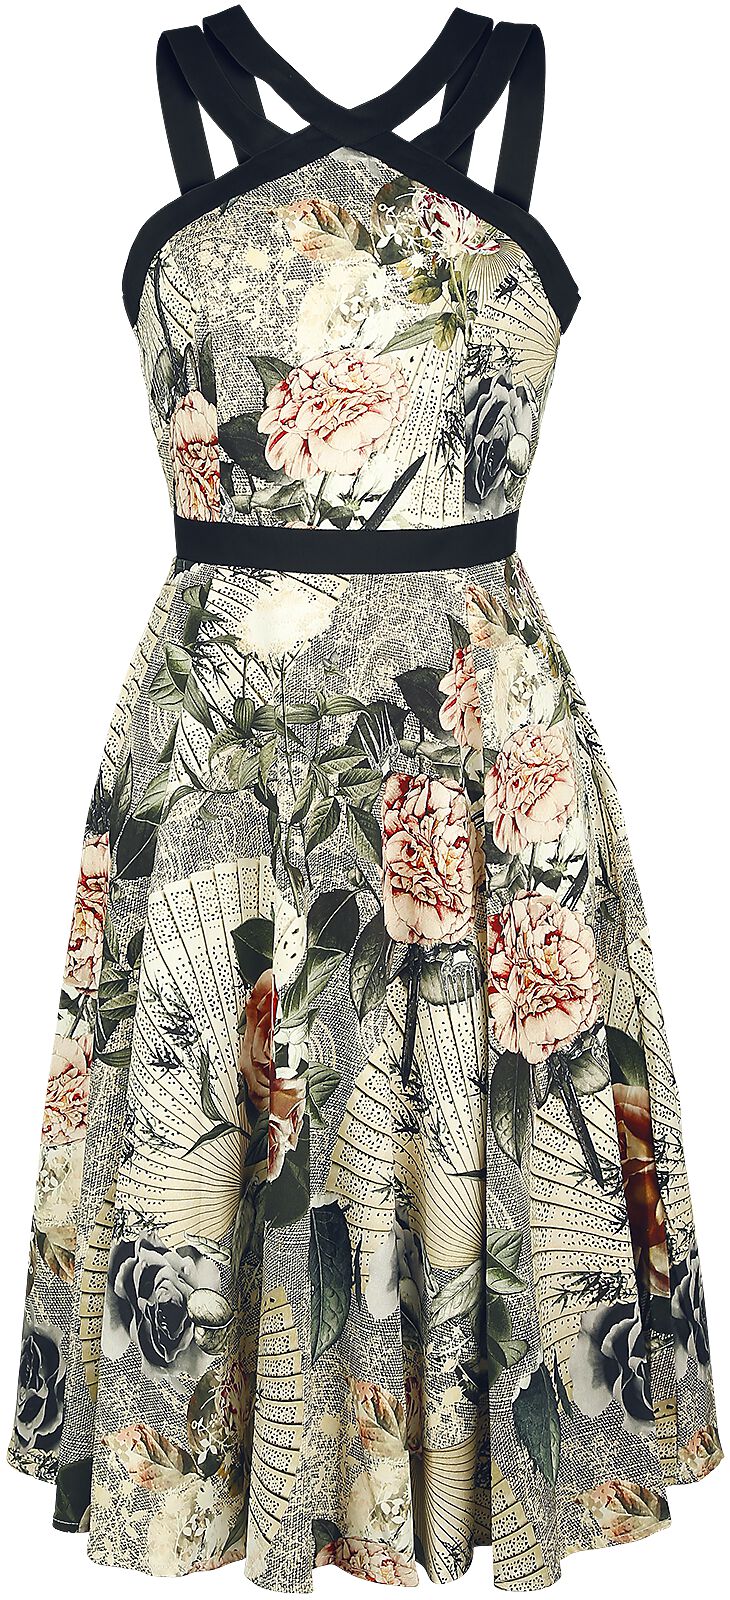 H&R London - Rockabilly Kleid knielang - Ancient Roses - S bis 4XL - für Damen - Größe 3XL - multicolor